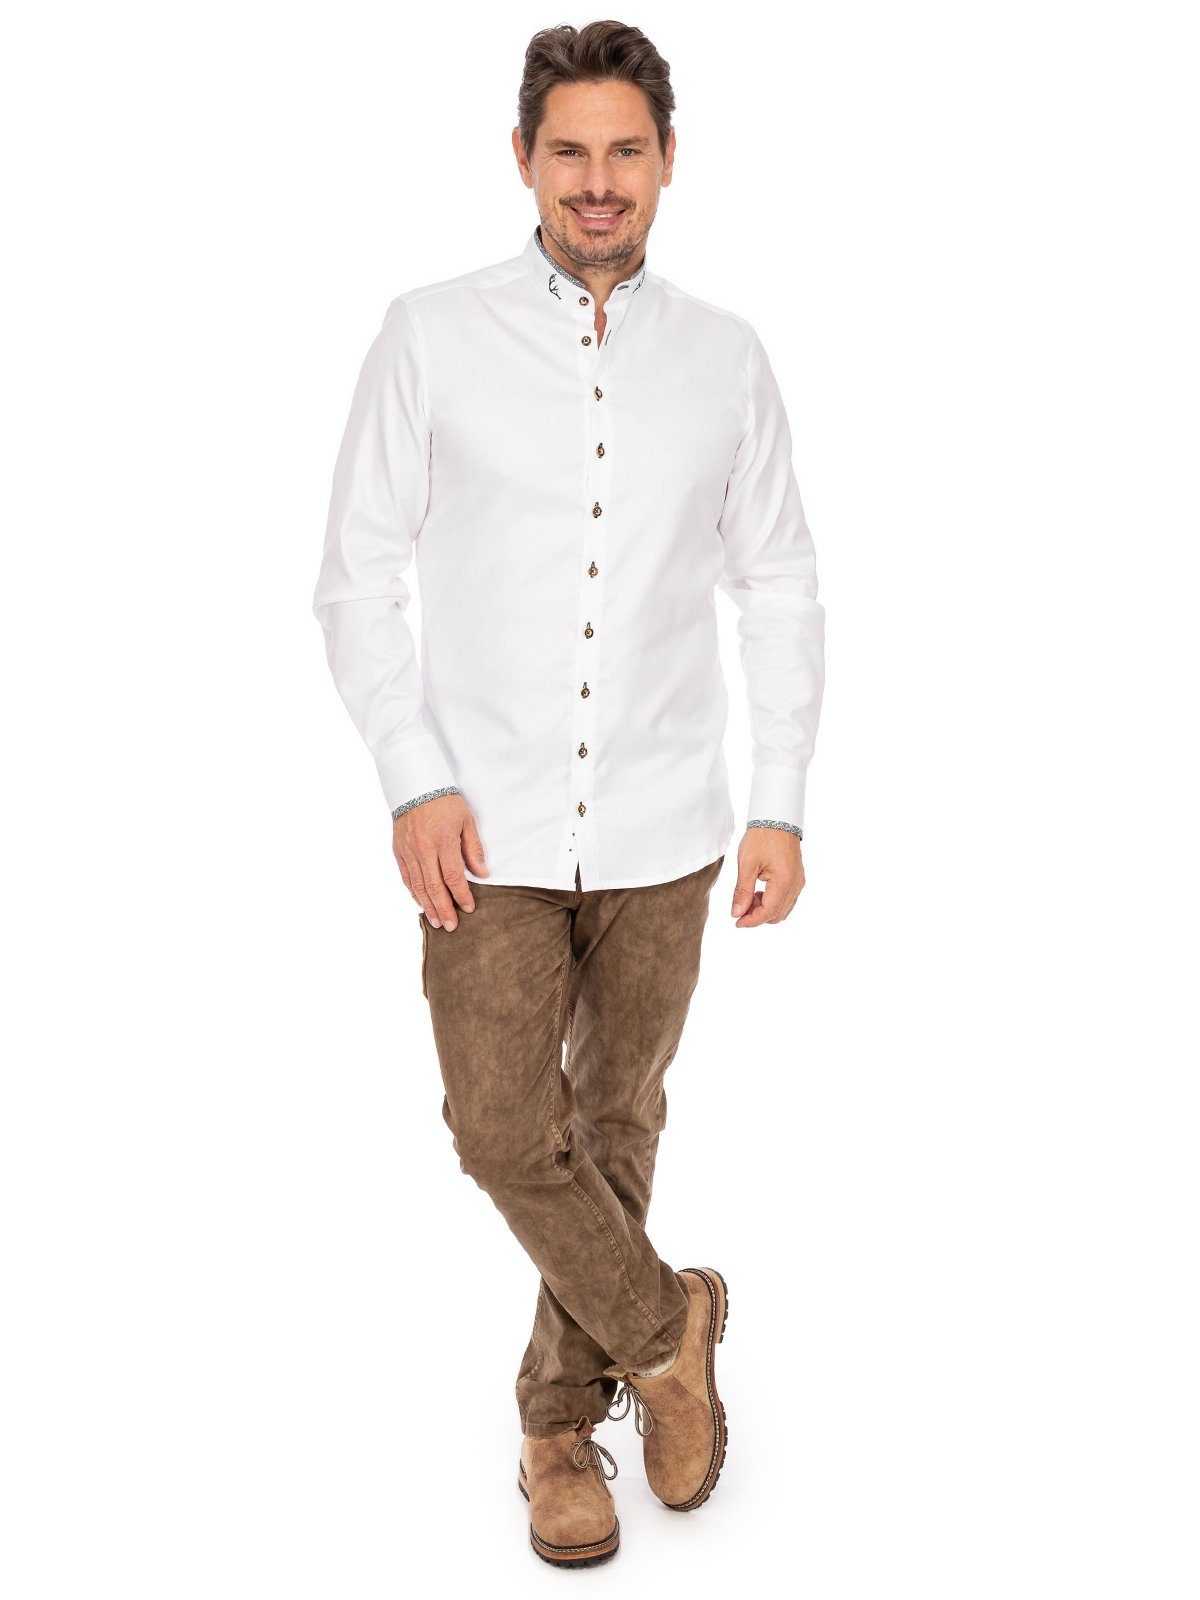 oliv Fi Gipfelstürmer Hemd weiß Stehkragen Trachtenhemd (Slim 420000-4246-155